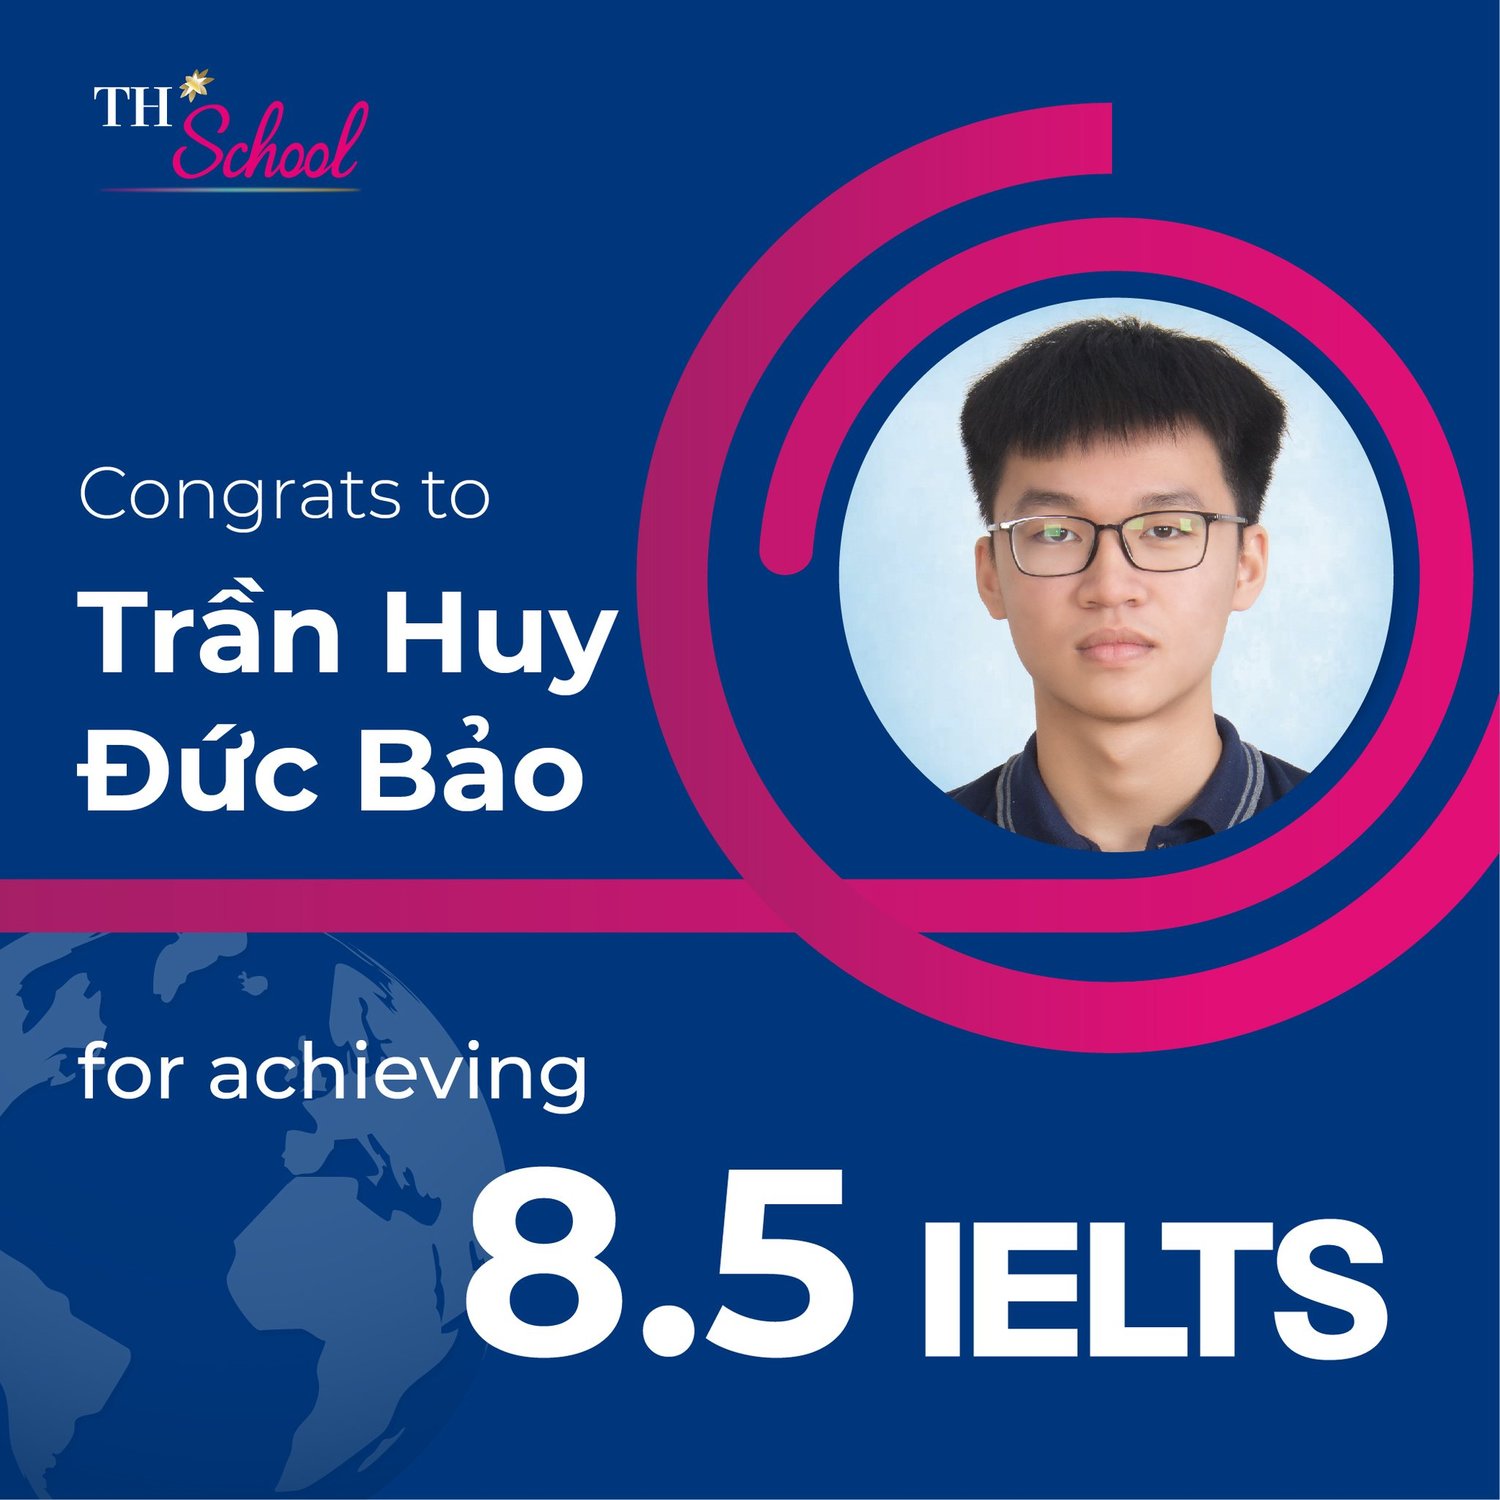 Tran Huy Duc Bao - student of TH School just got 8.5 IELTS